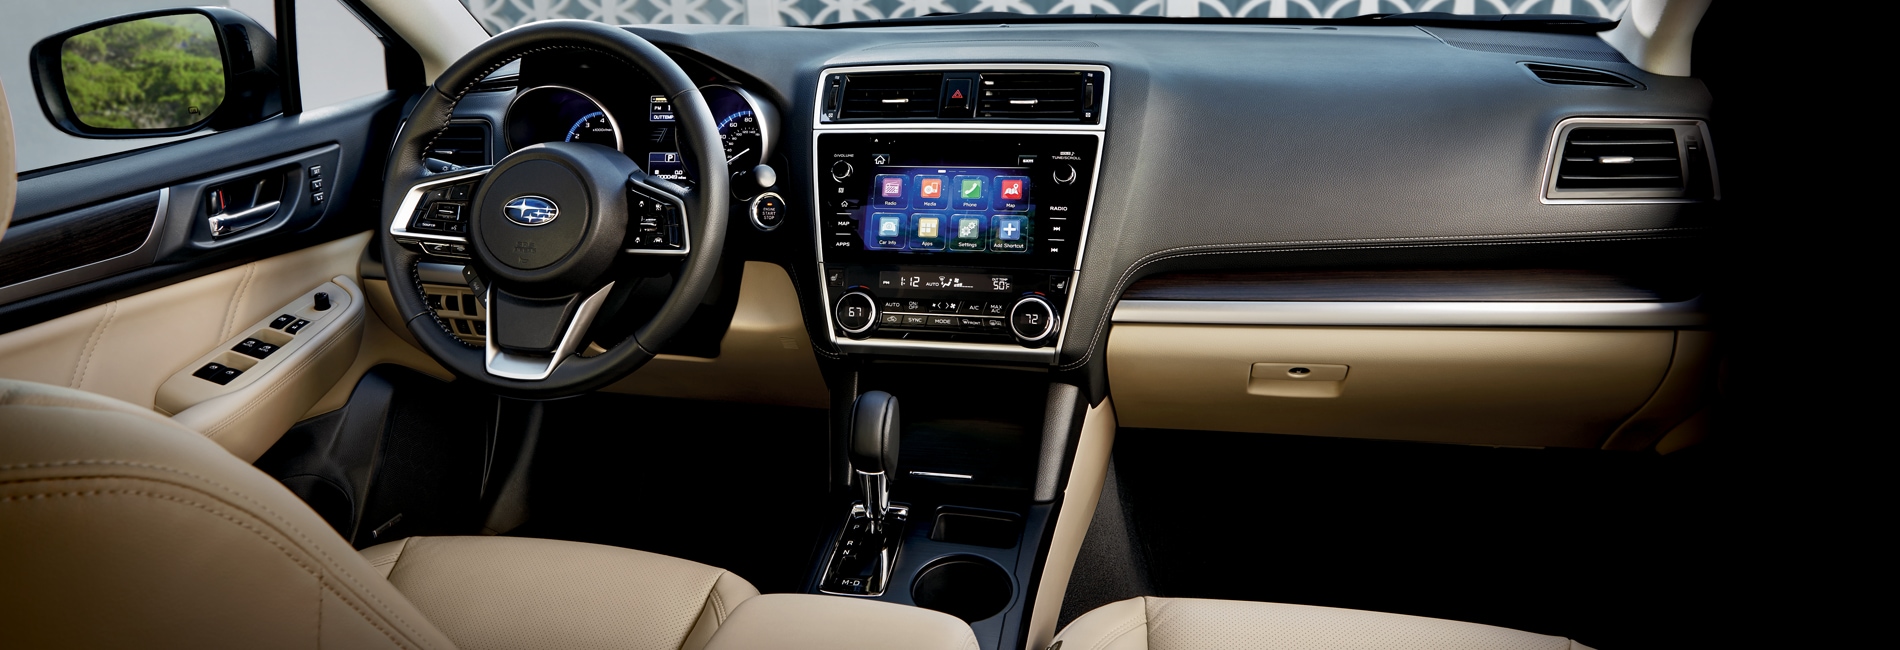 2019 Subaru Legacy Interior Features